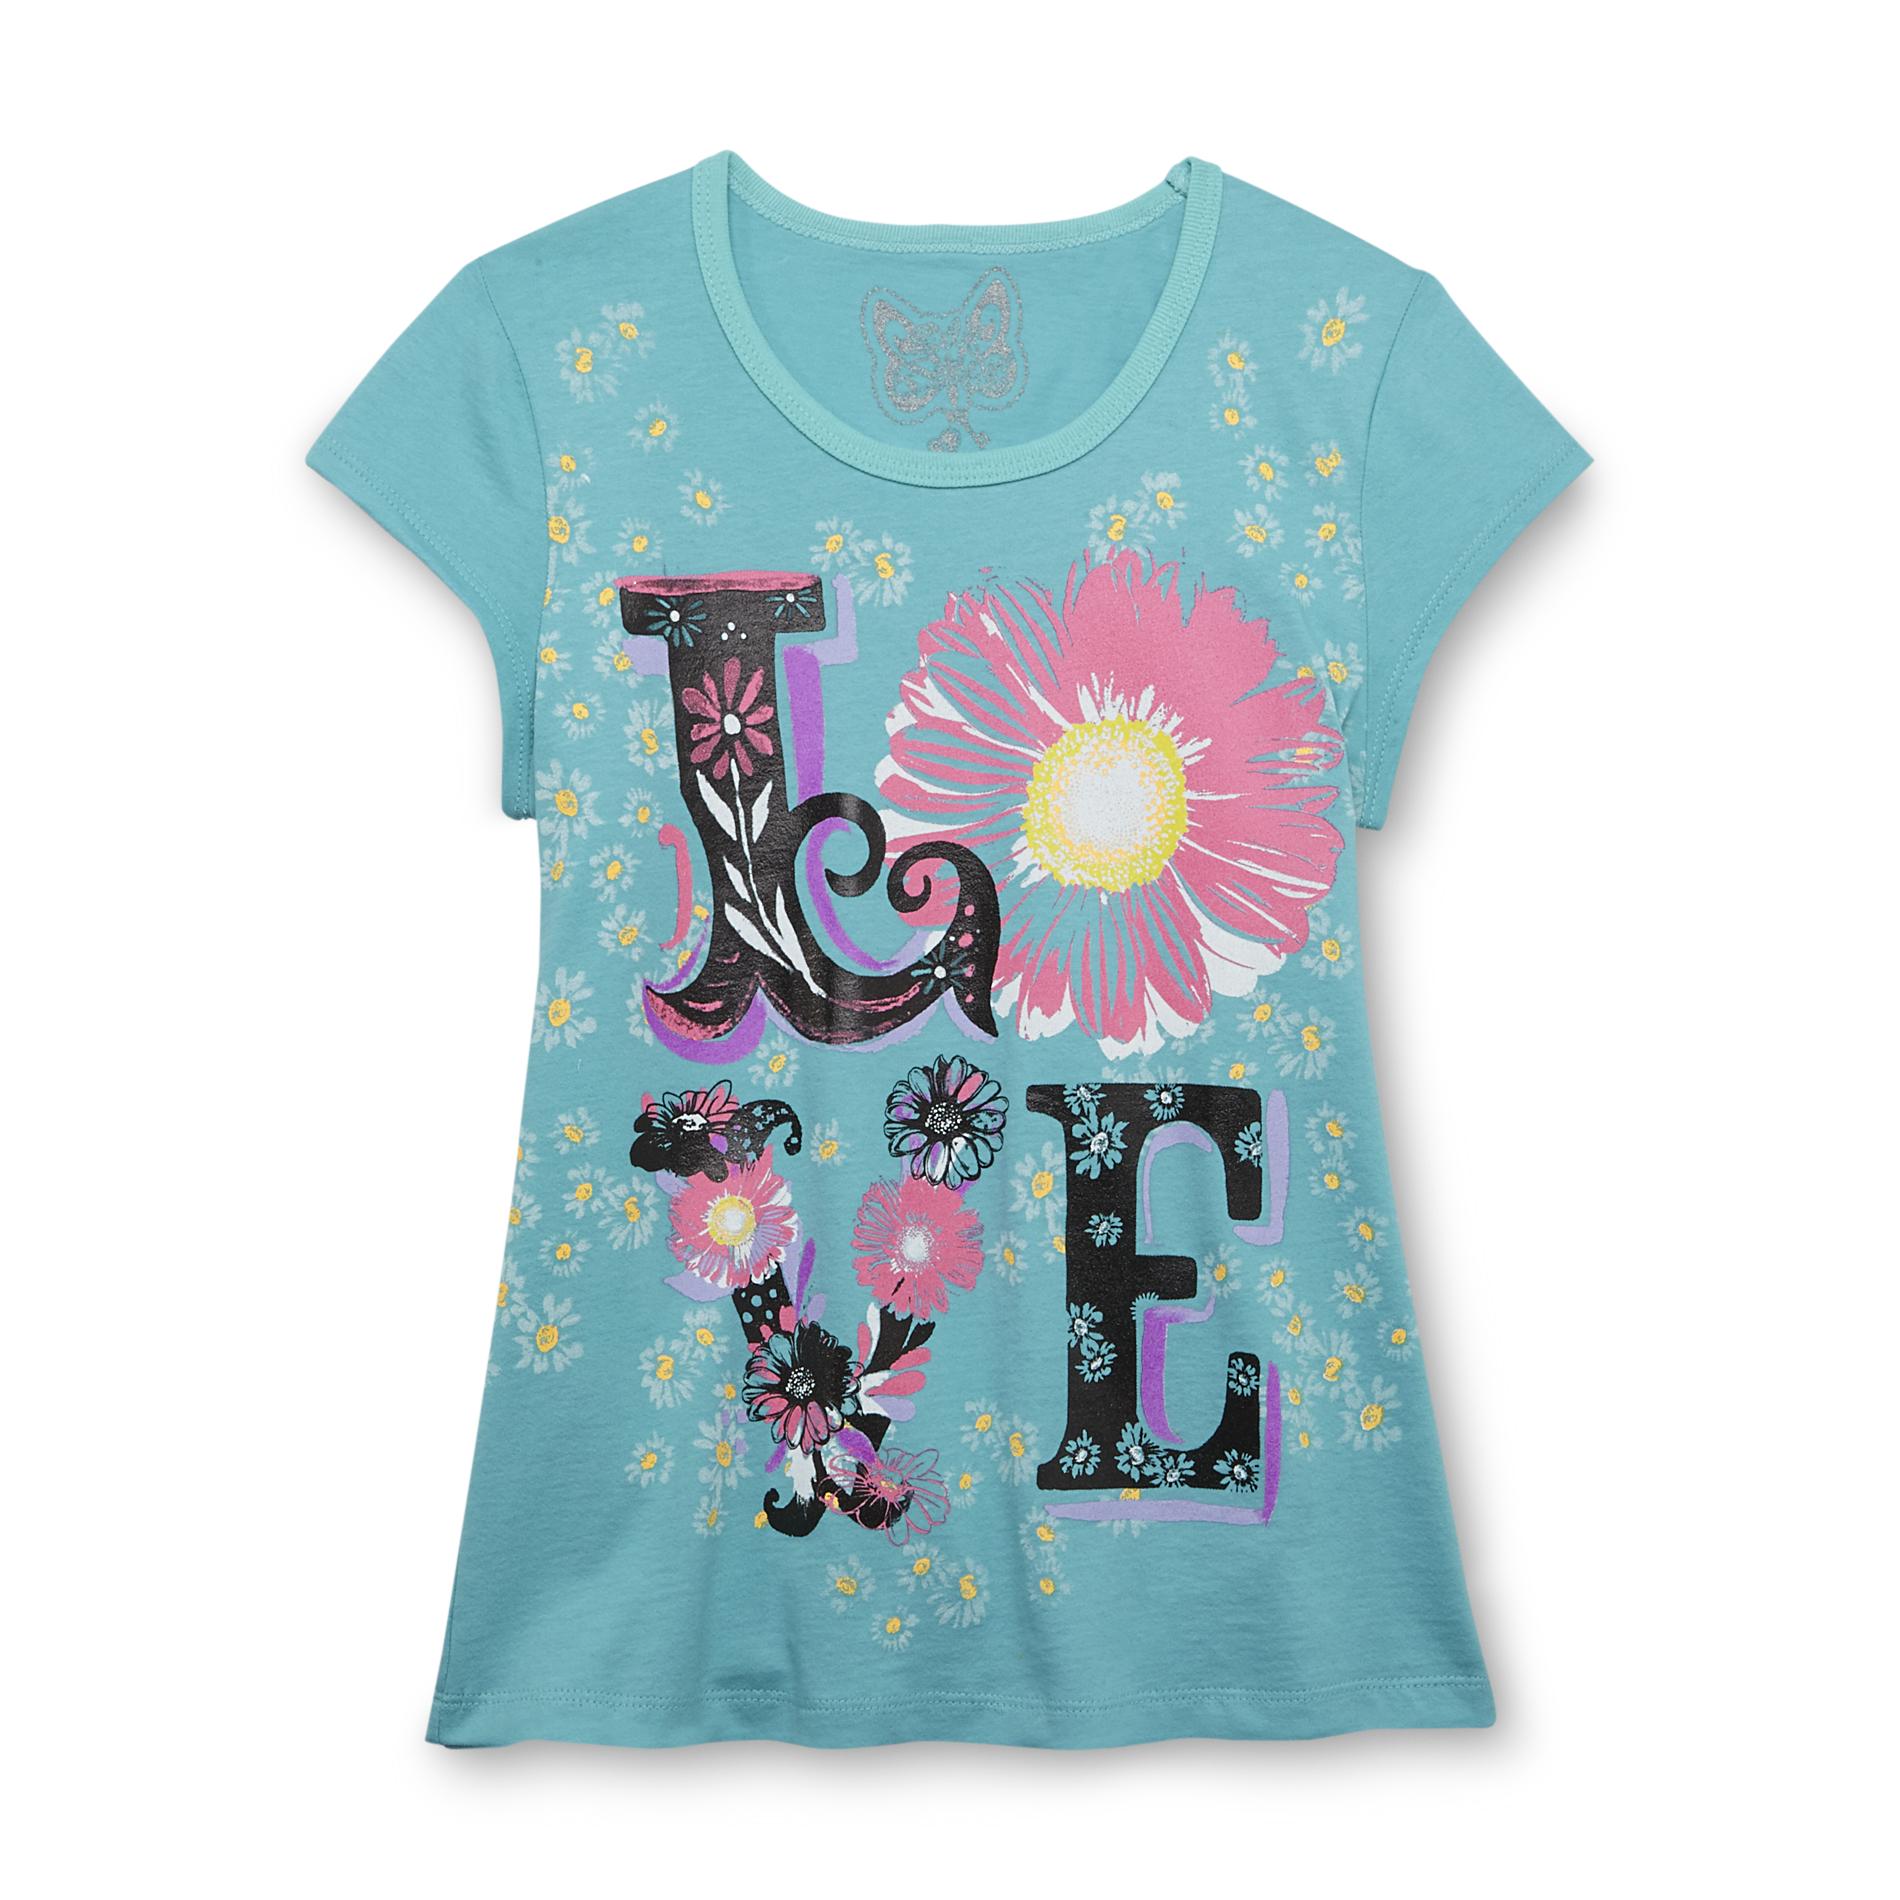 Self Esteem Girl's Cap Sleeve Graphic T-Shirt - Floral